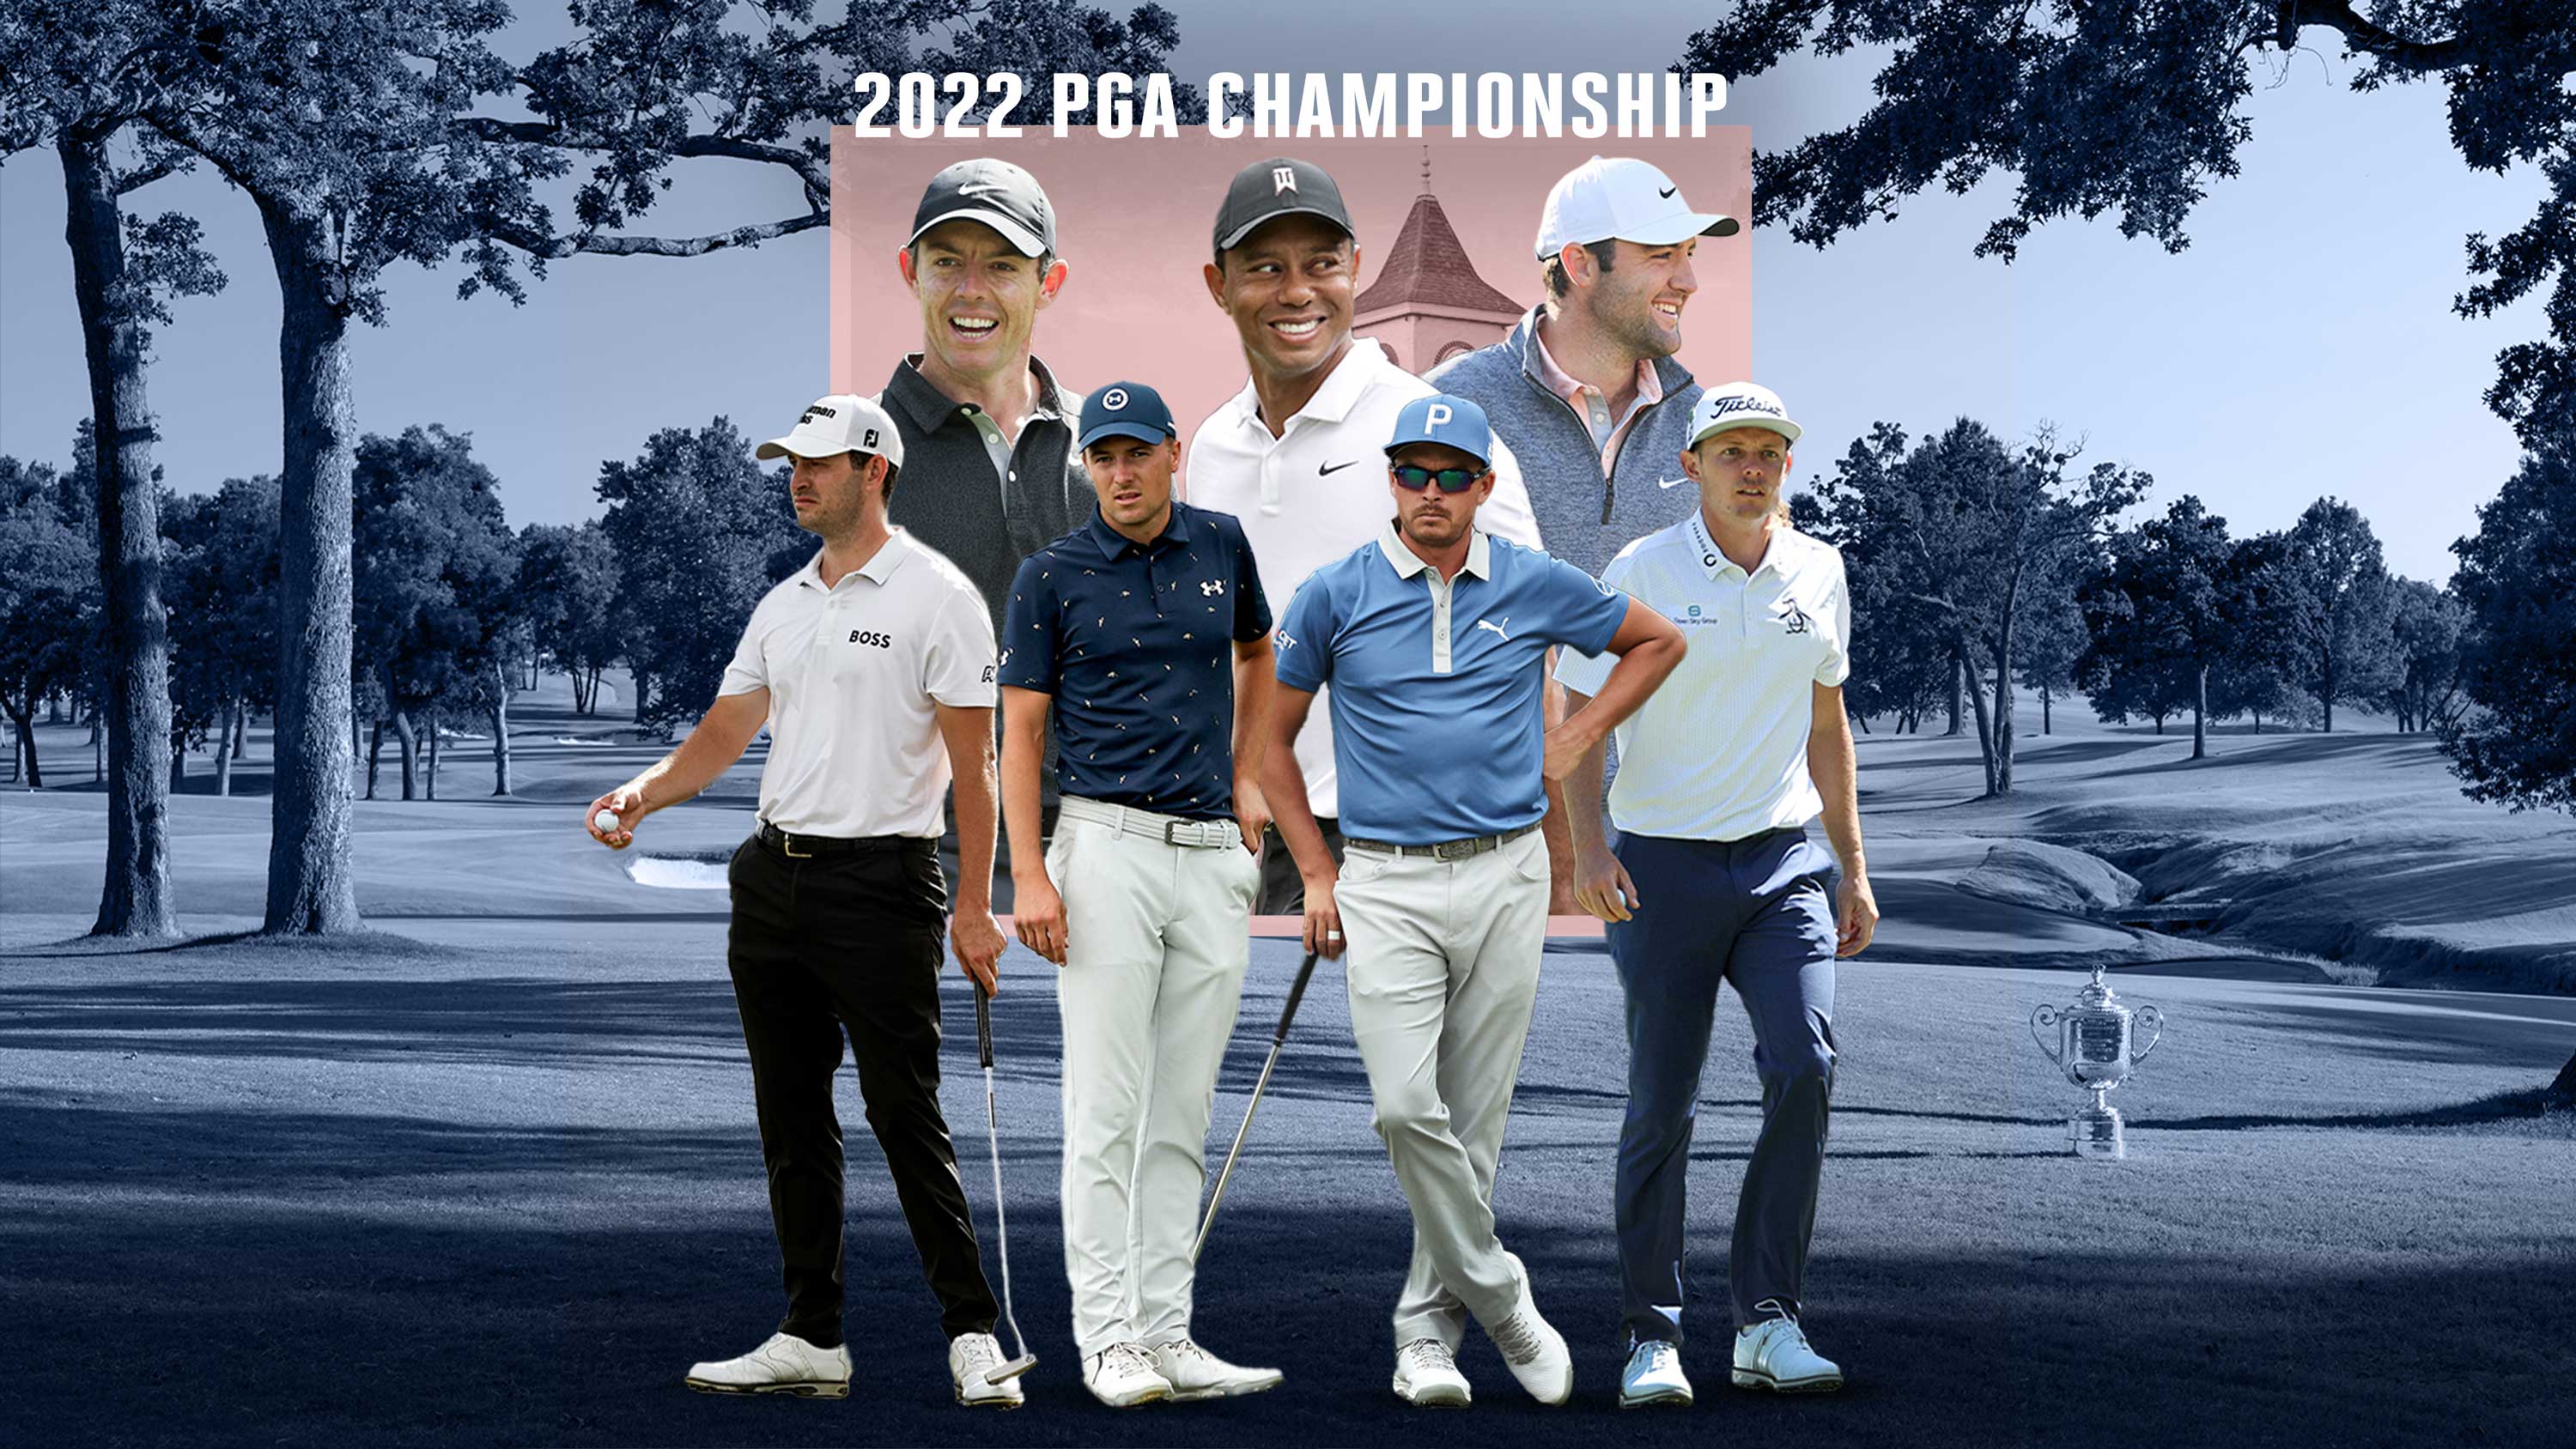 2023 PGA Championship - Wikipedia